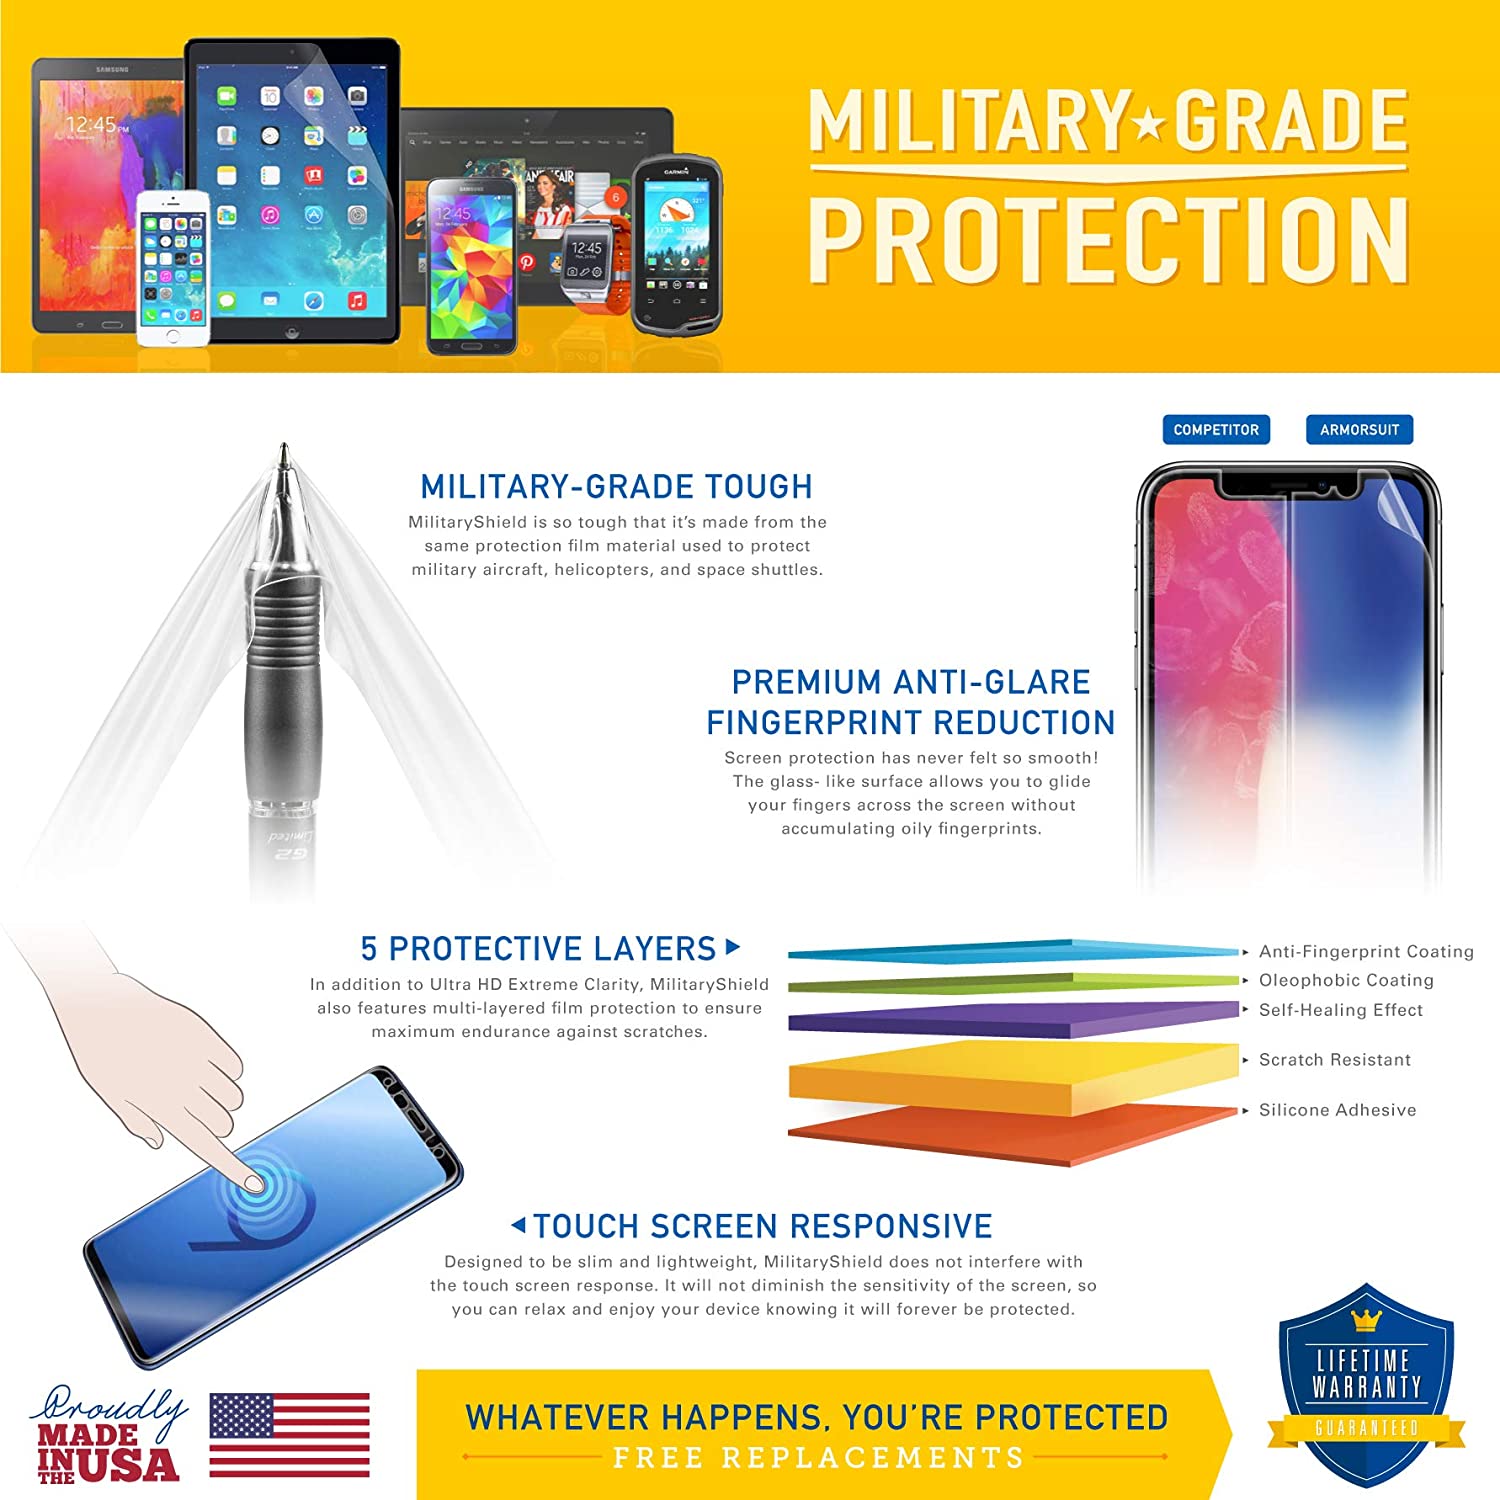 Samsung Gear S Full Body Skin Protector